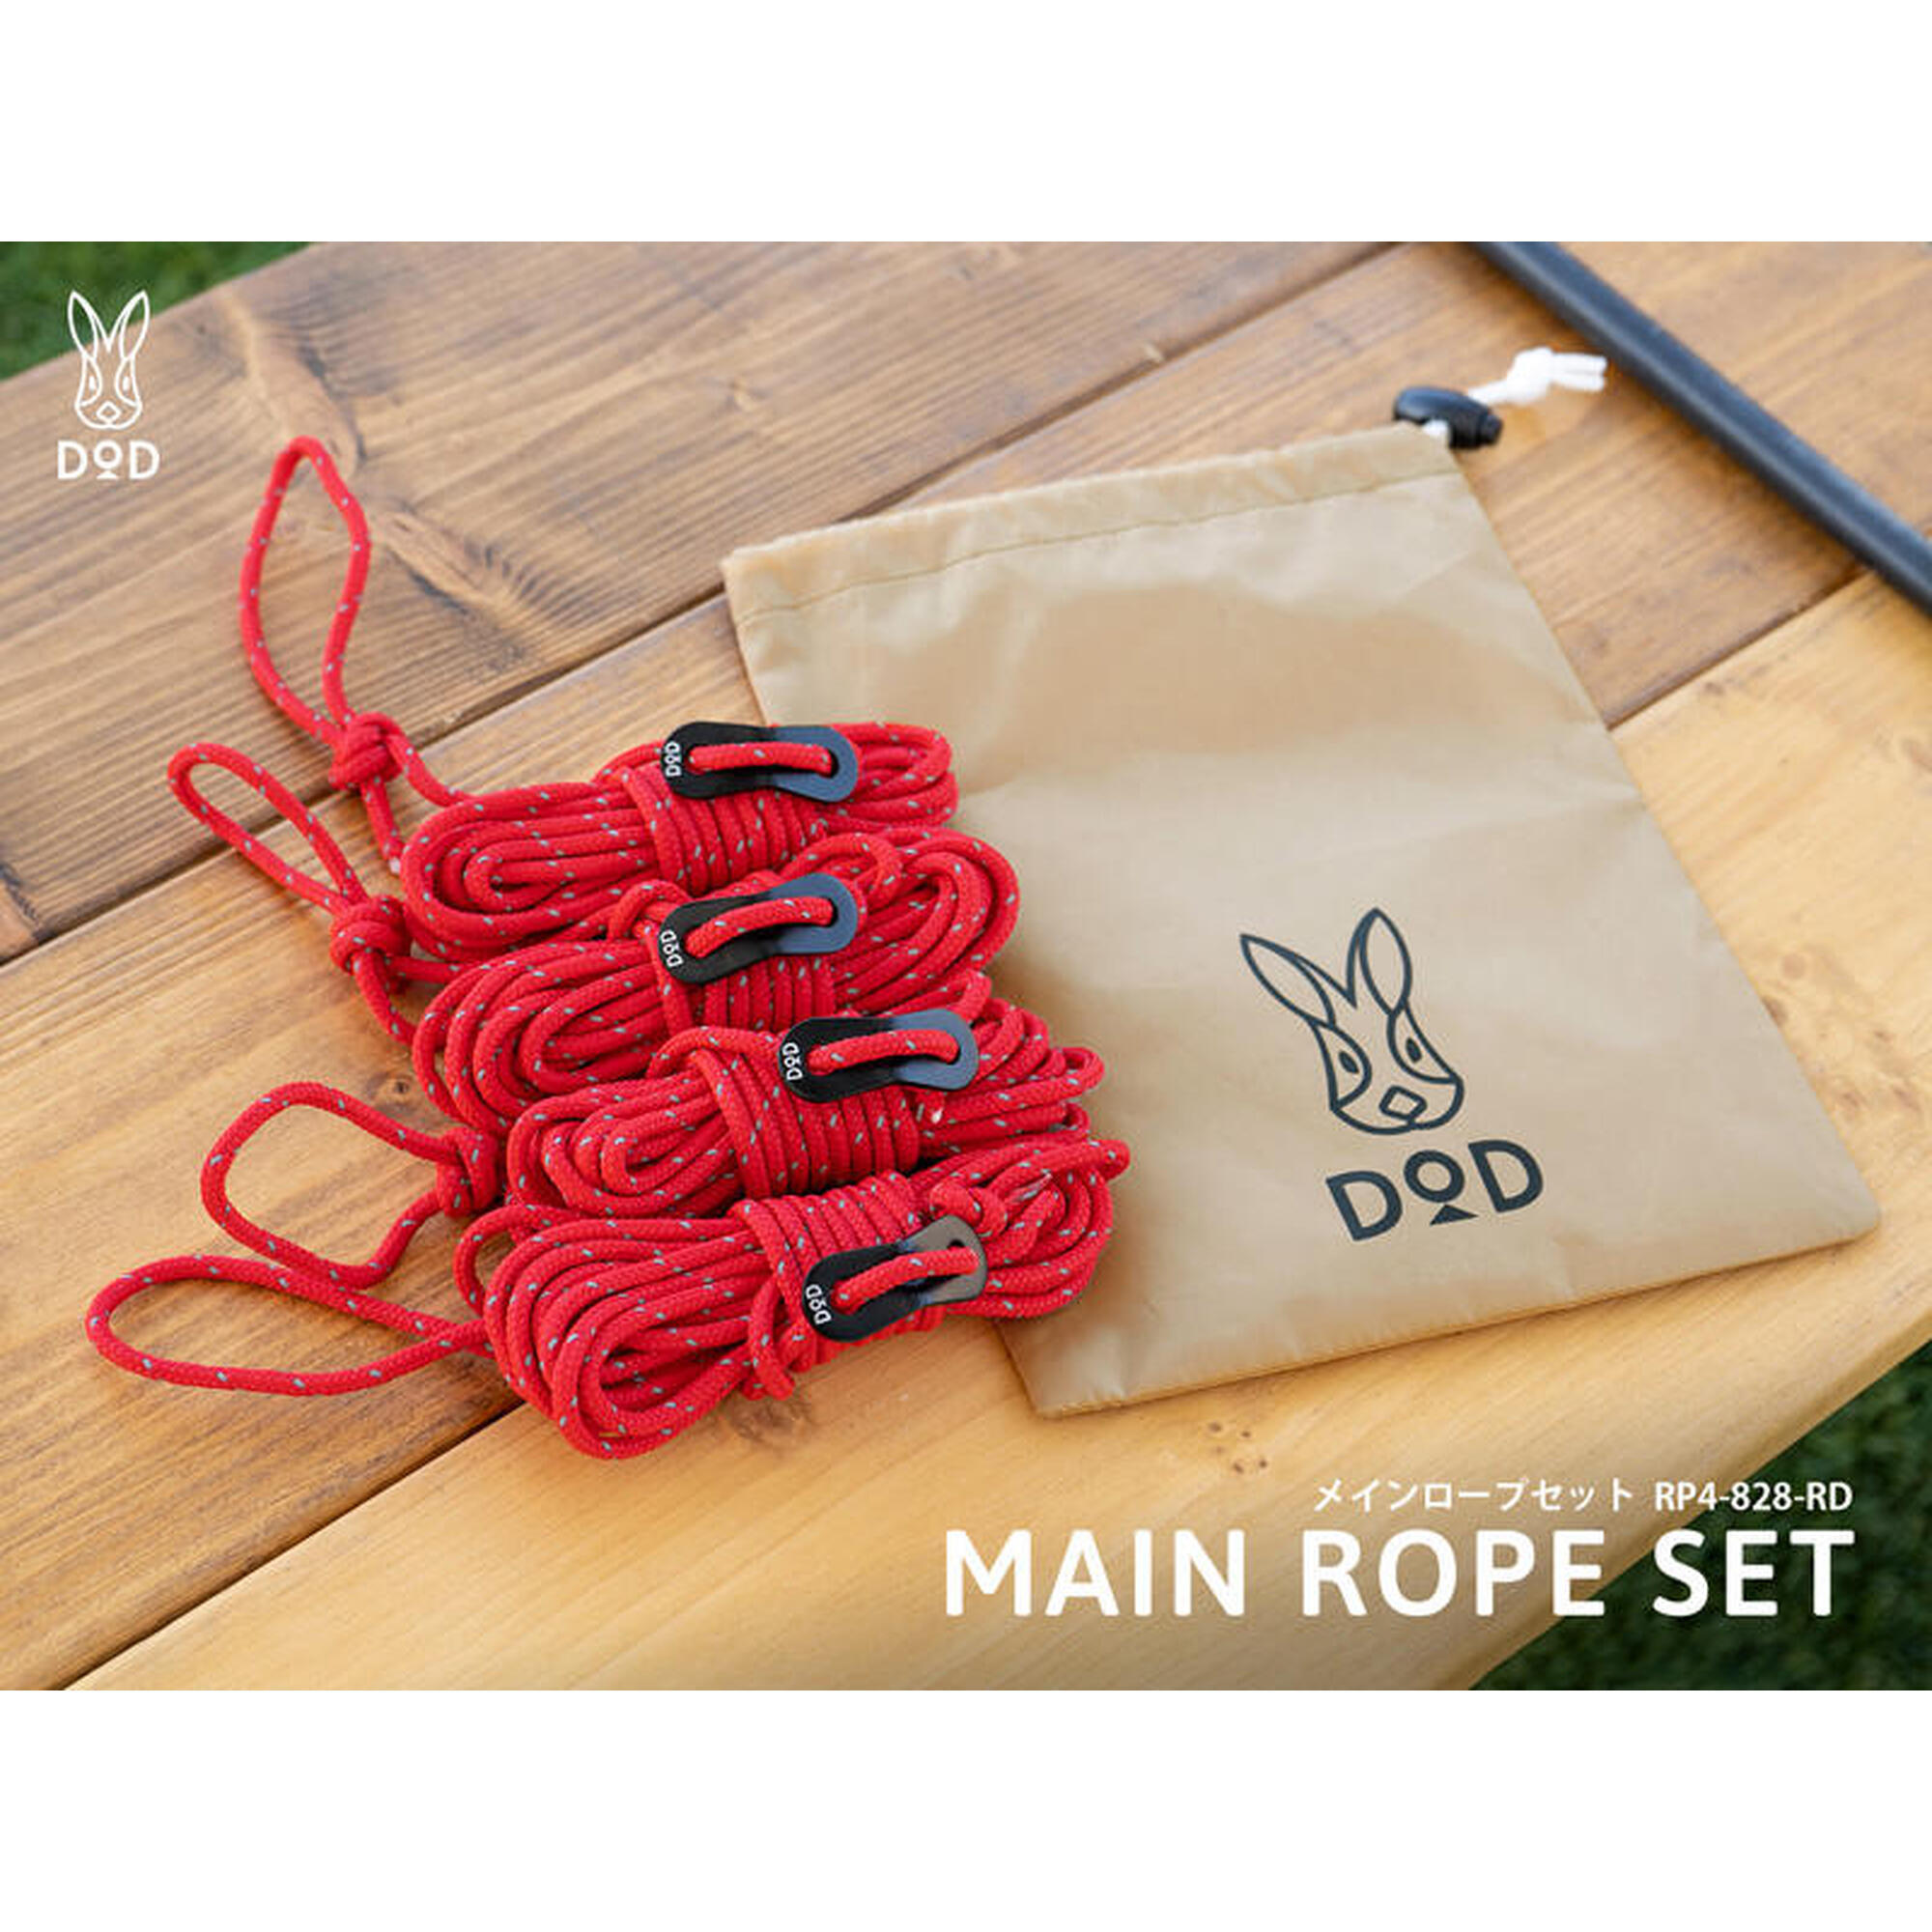 Main Rope Set 4M - Red